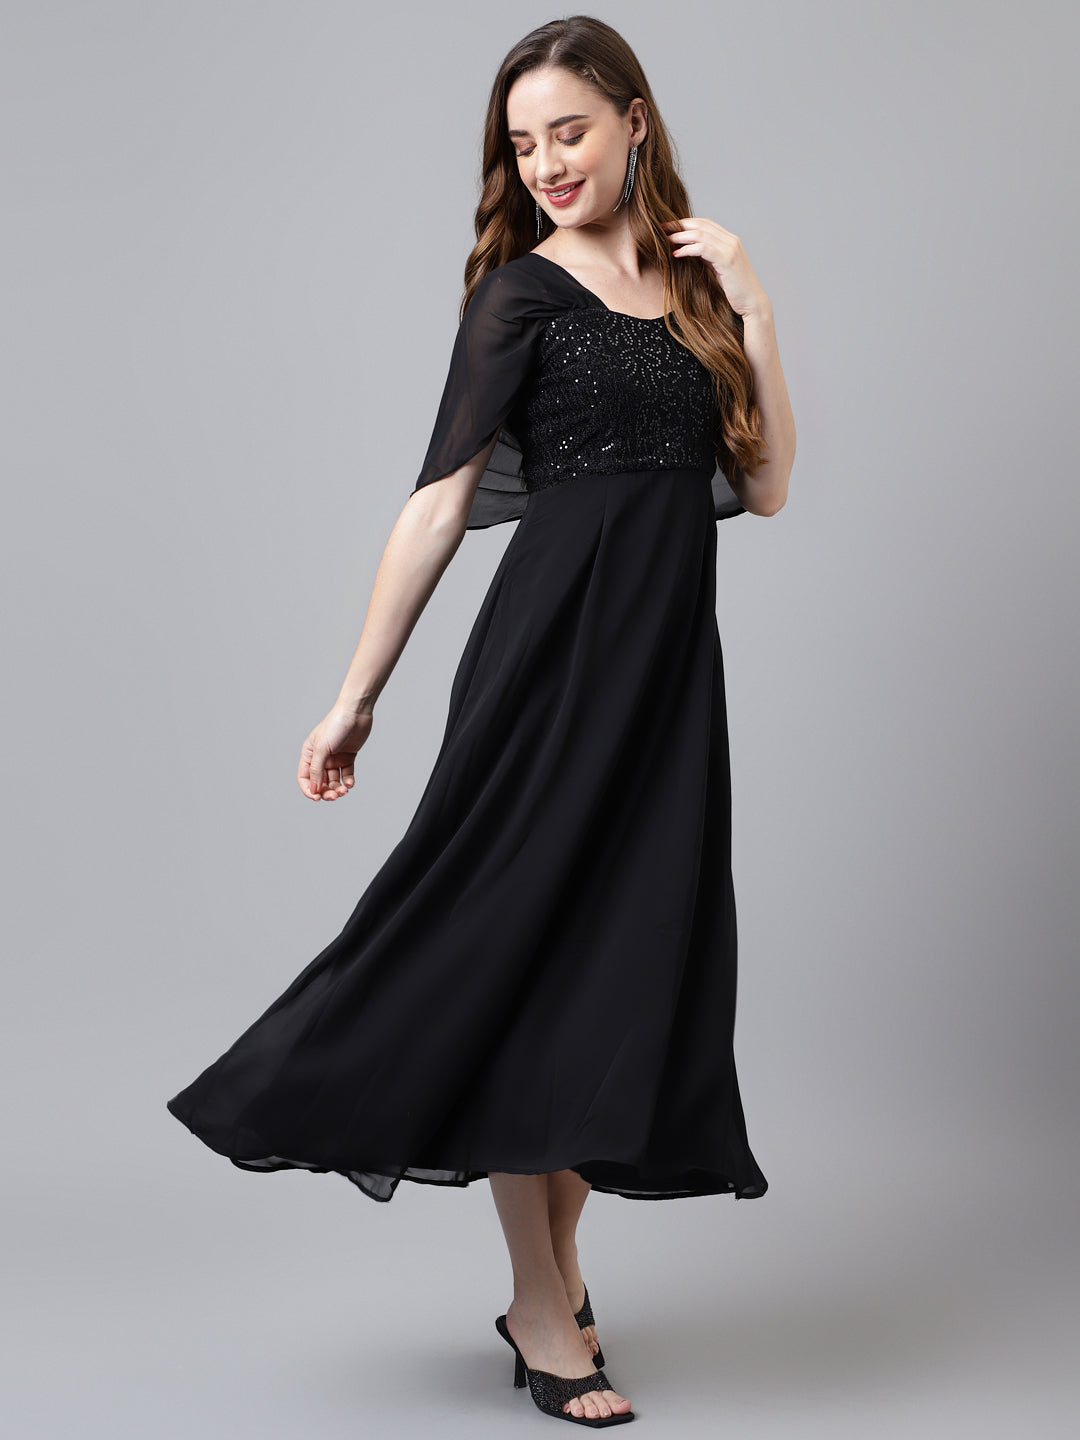 Black Half Sleeve Solid Long Dress